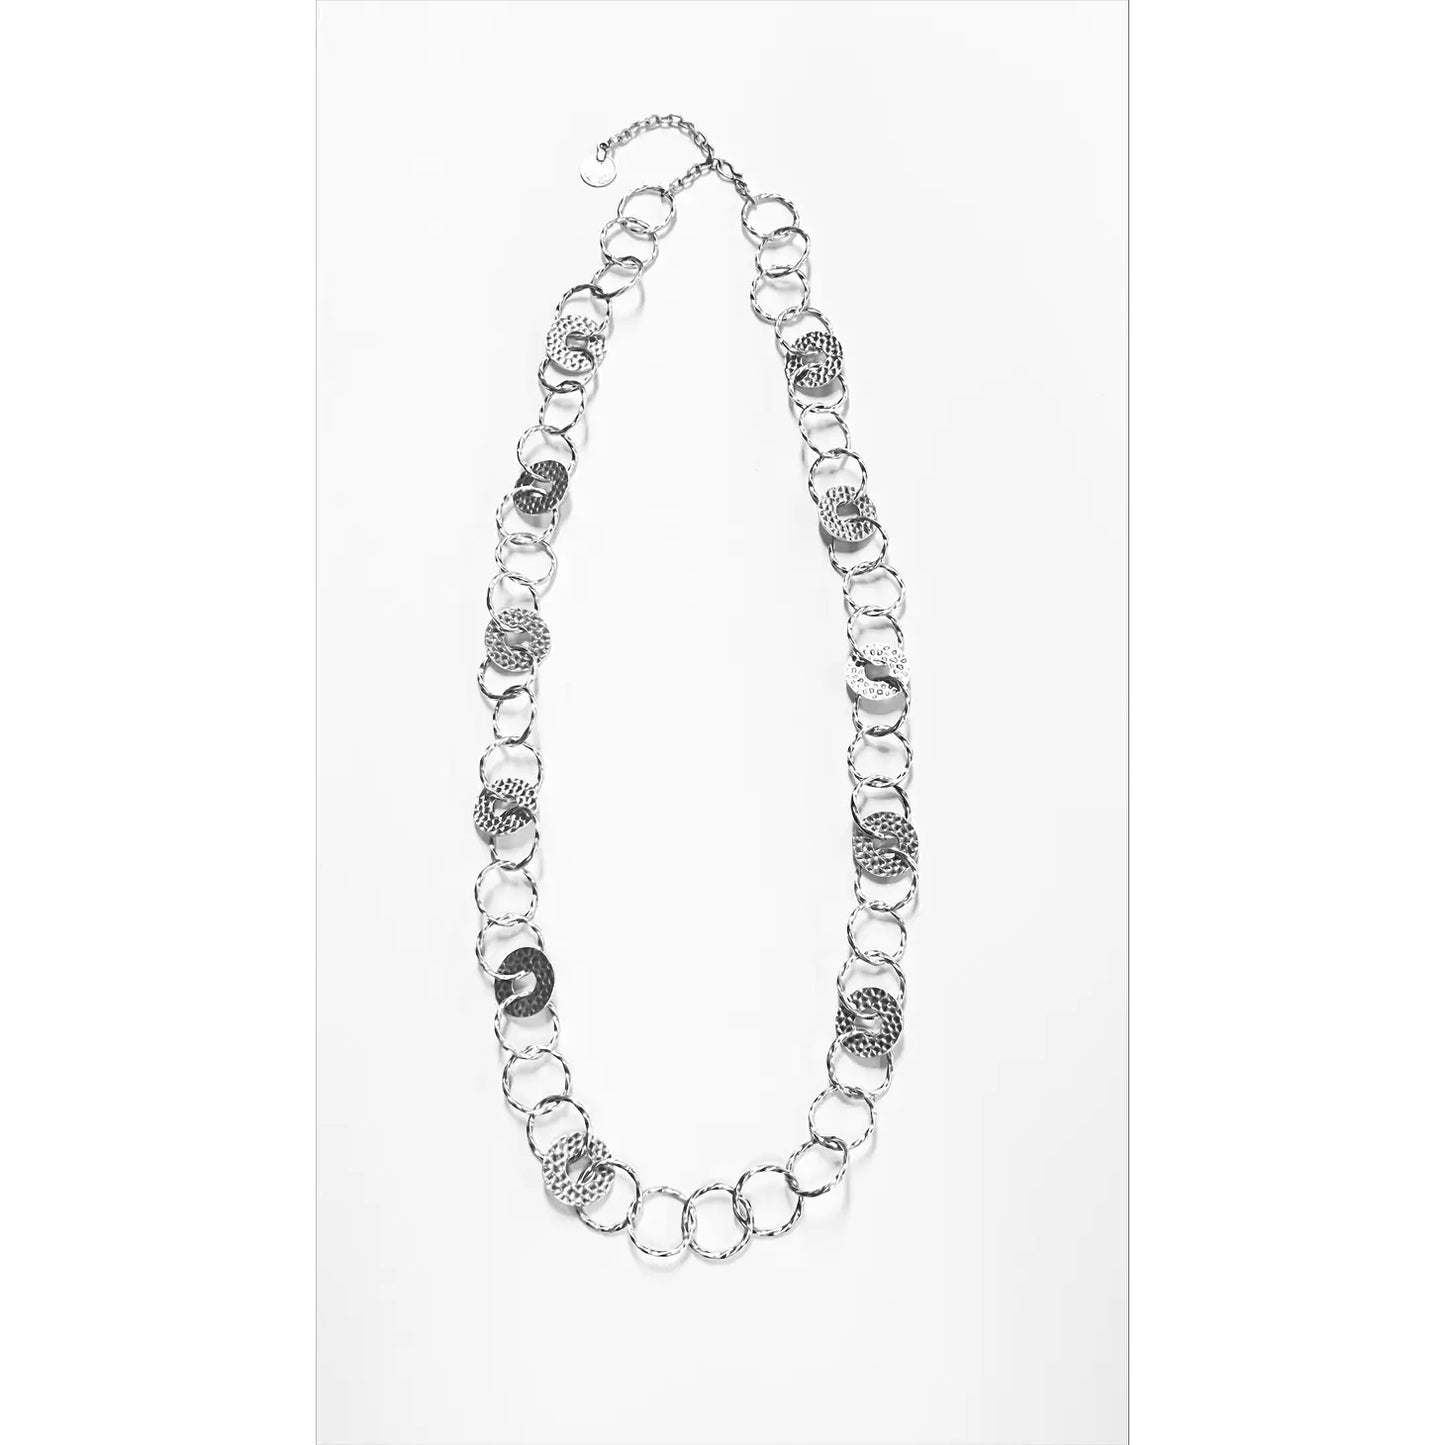 Chanour Turkish Silver Necklace - #020-1020